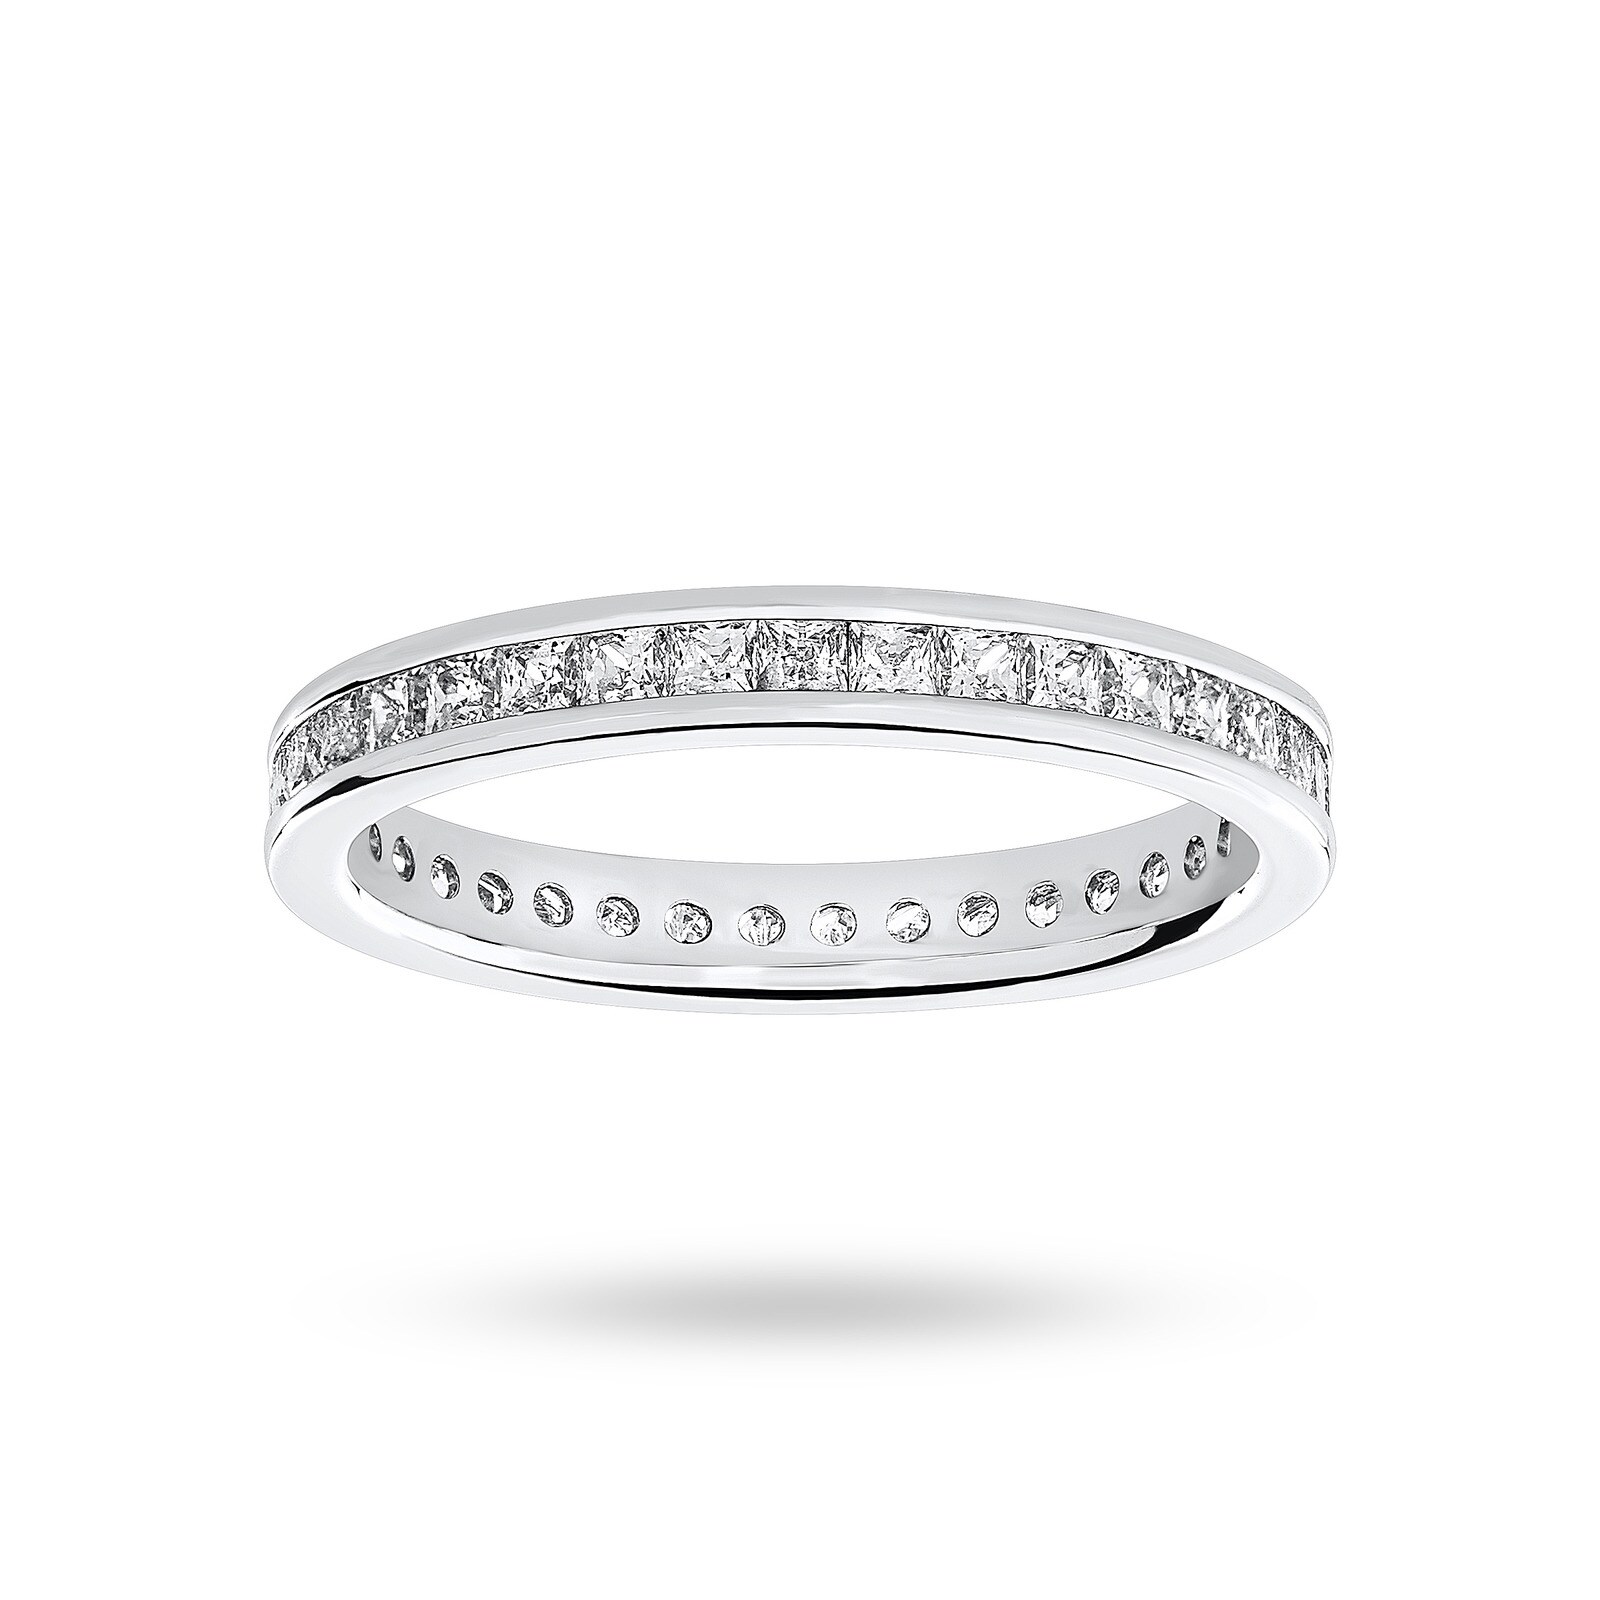 Platinum 1.00 Carat Princess Cut Channel Set Full Eternity Ring - Ring Size O